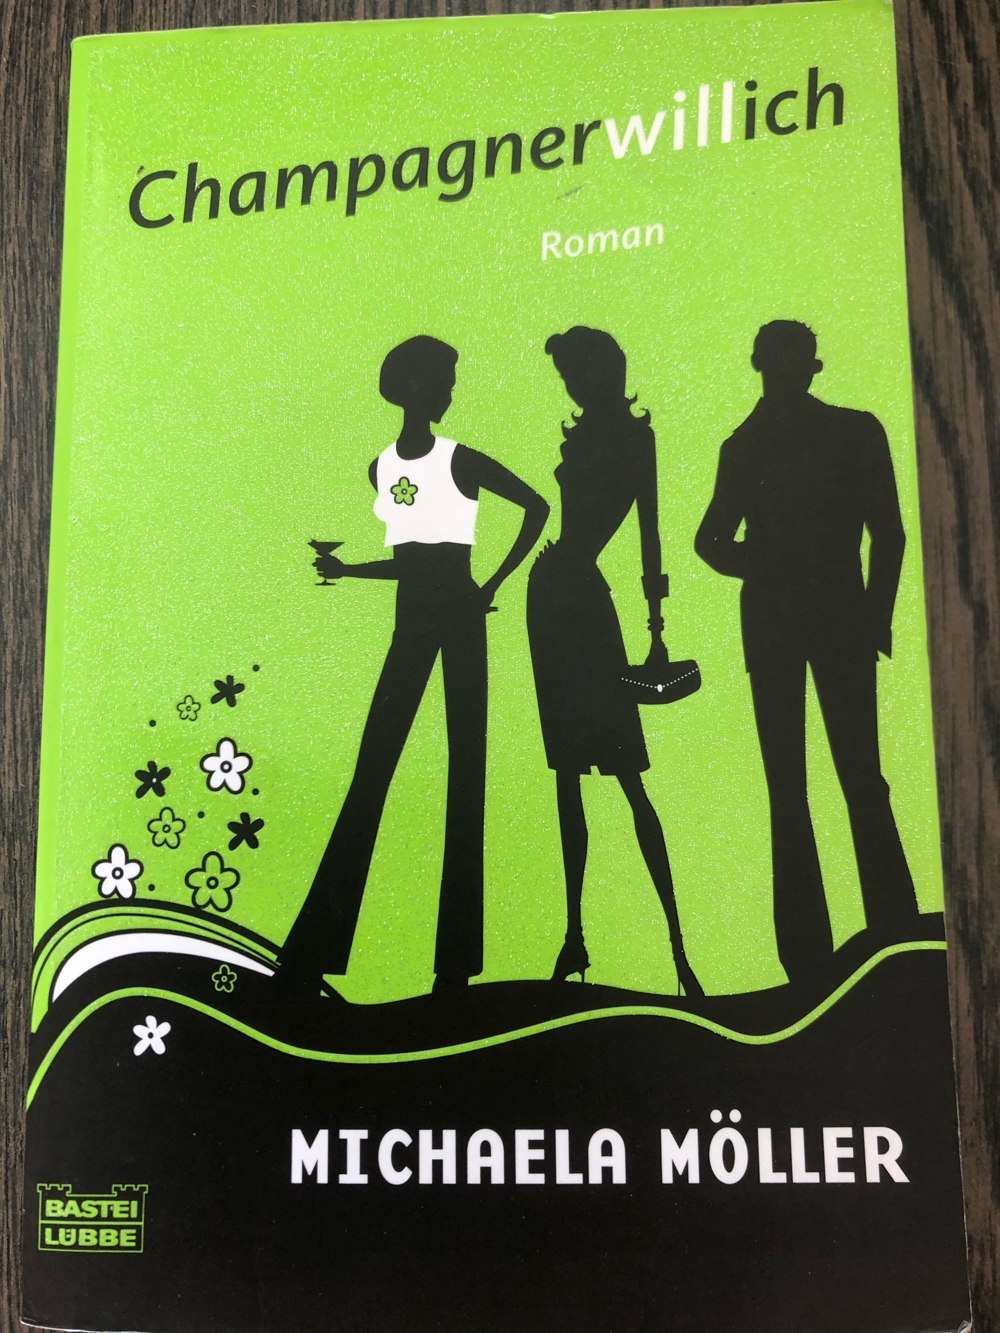 Champagner will ich, Michaela Möller